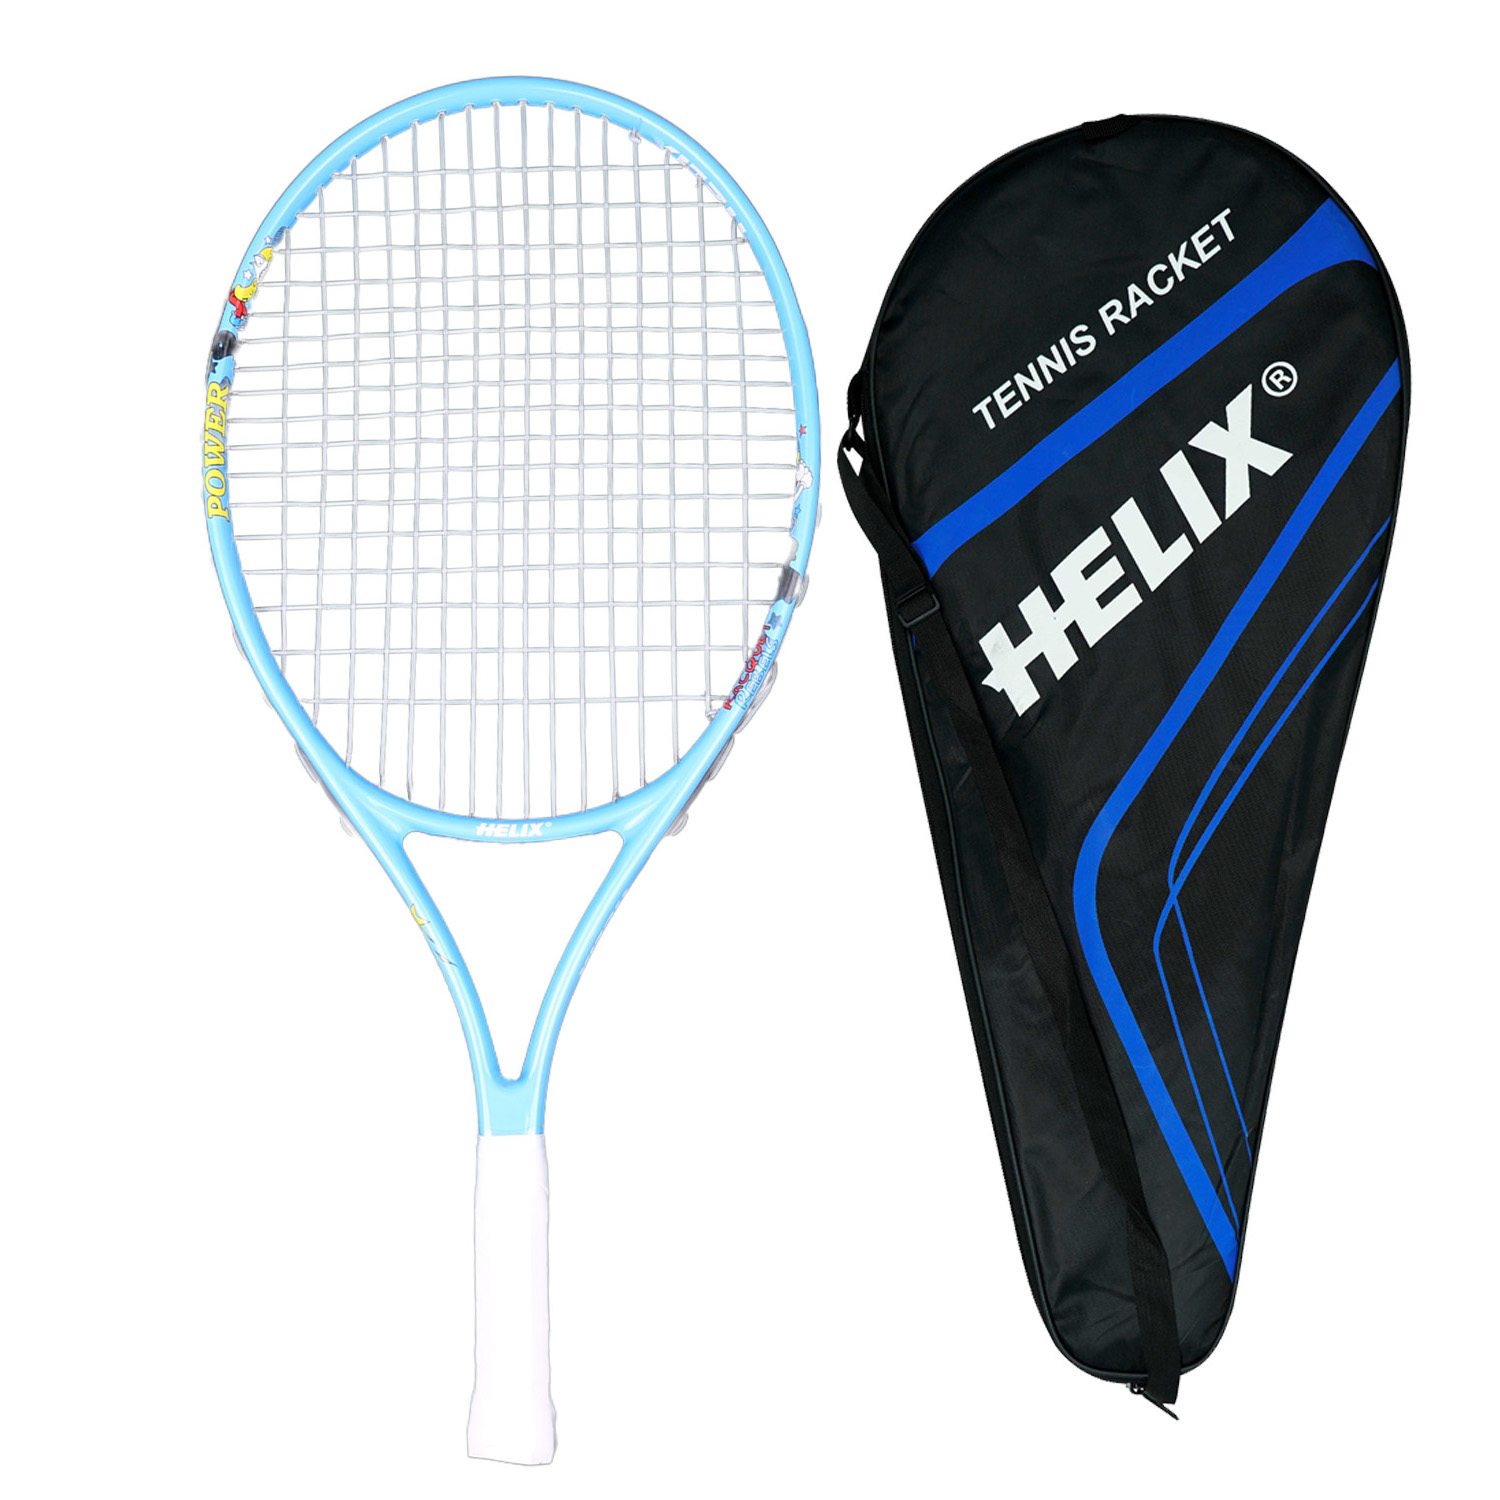 Helix Power Tenis Raketi 23"